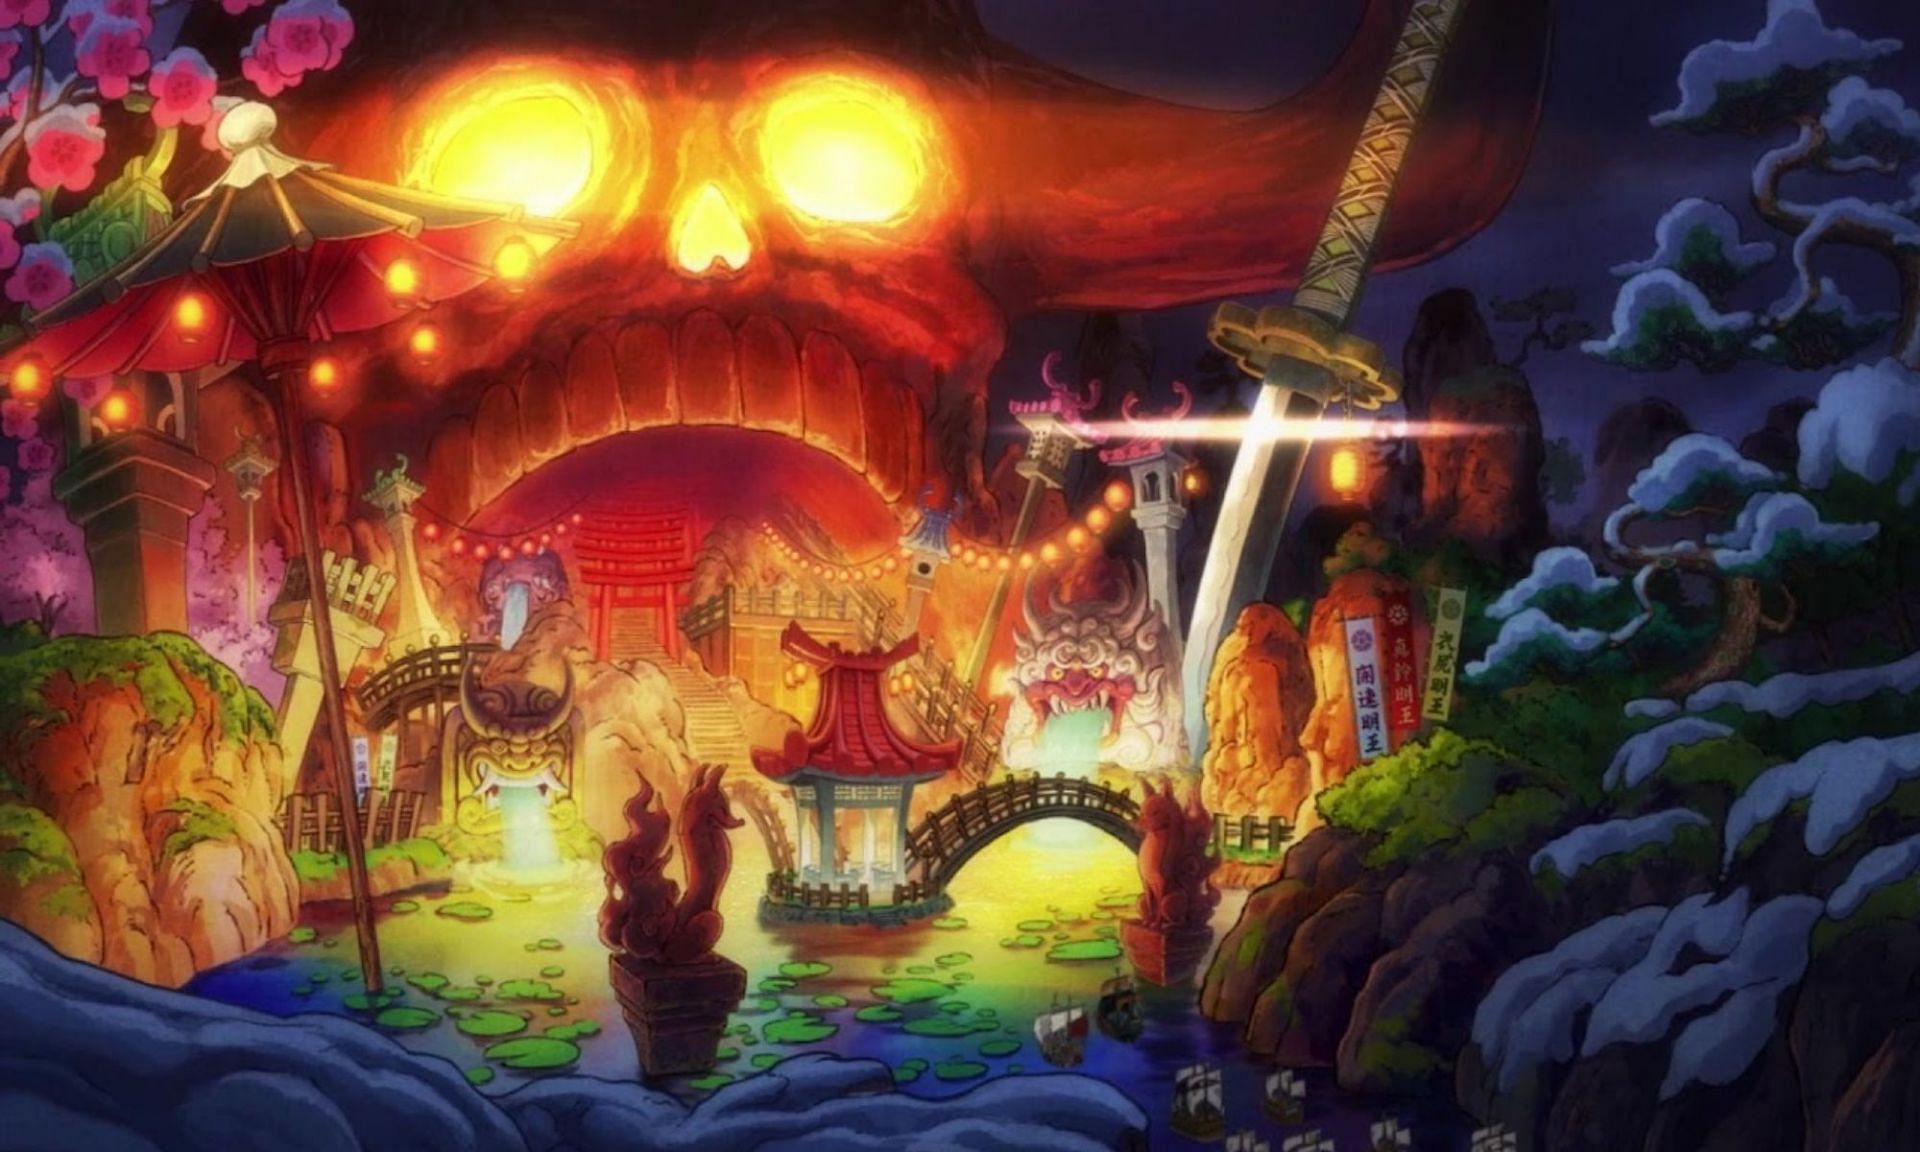 Series creator Eiichiro Oda is a very imaginative person (Image via Toei Animation)